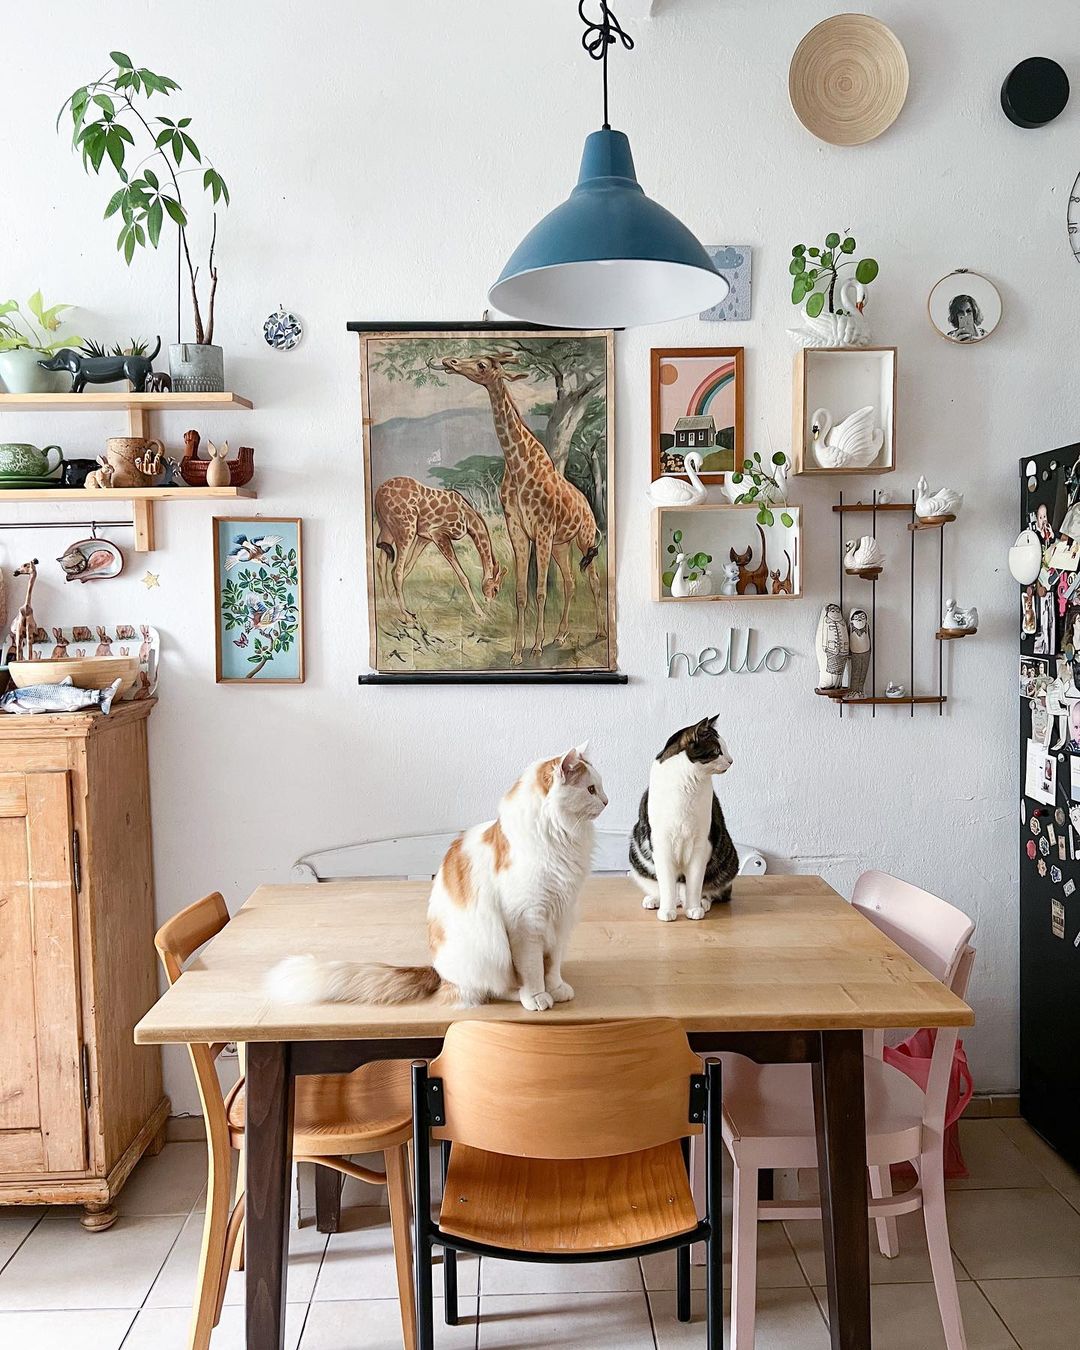 two kitties in front of art wall in kitchen of @fraeuleinnussboeck